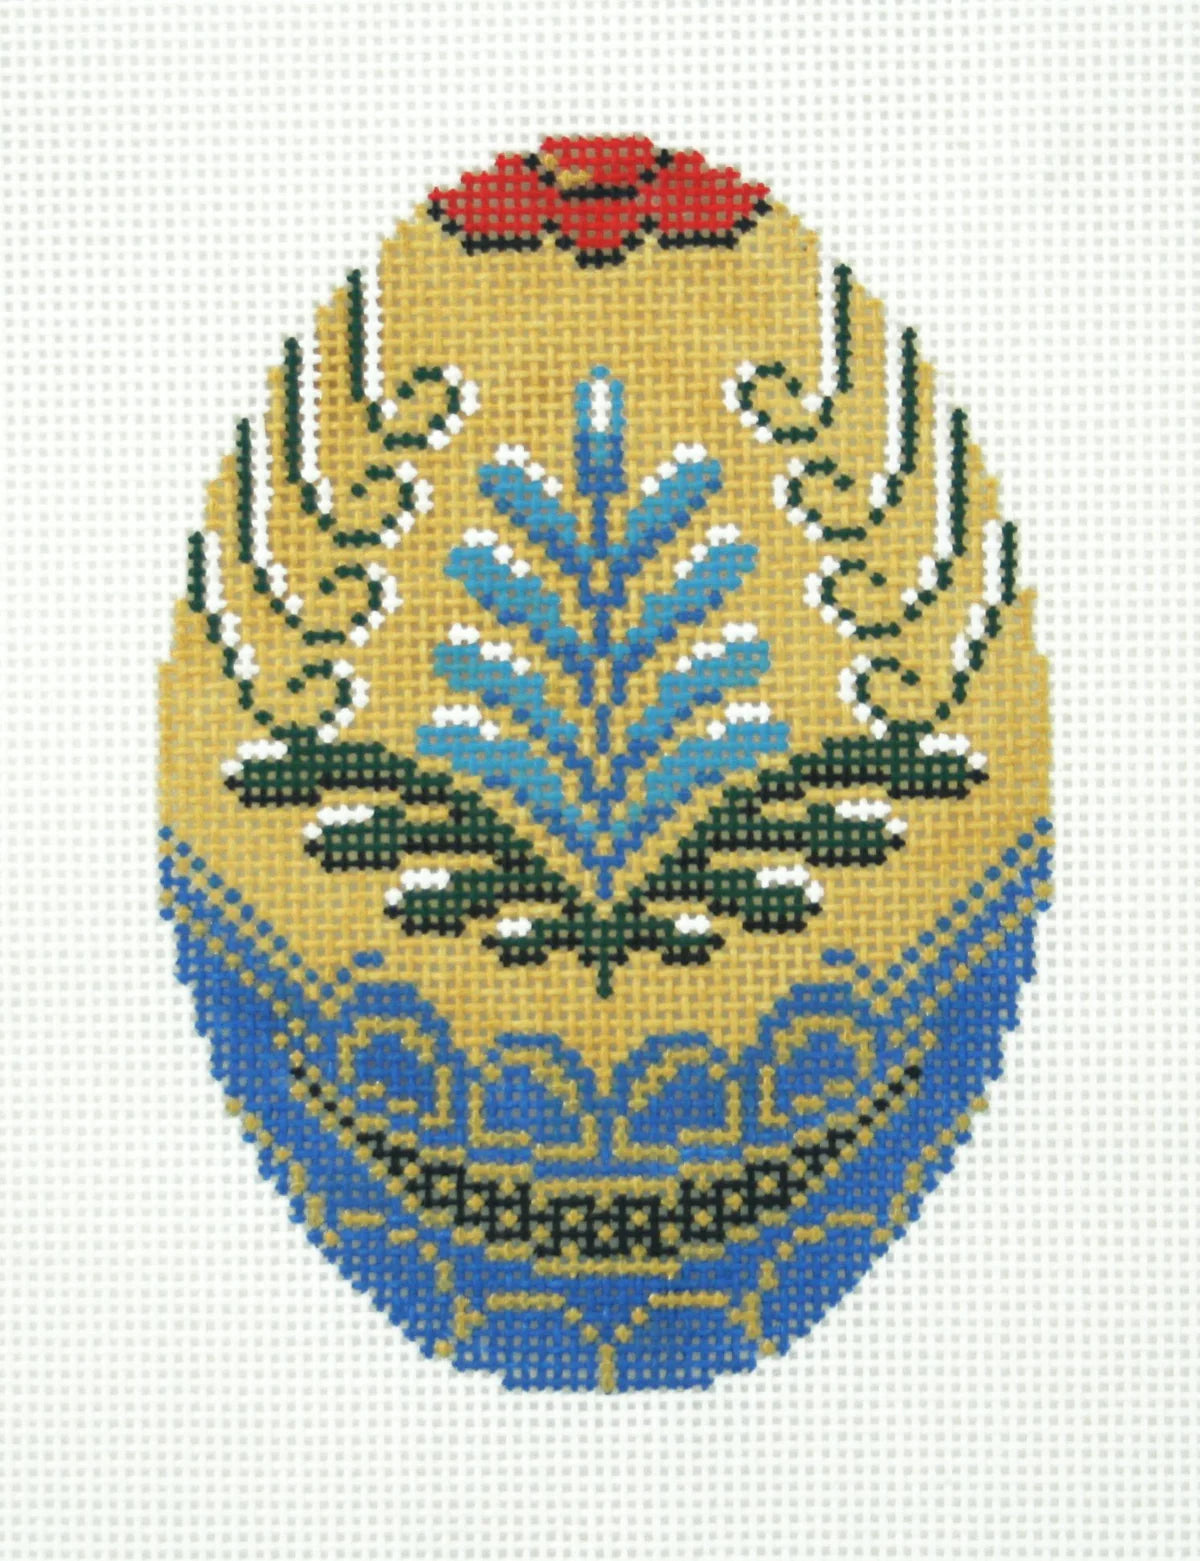 XM499 - Faberge Egg - Emblem on Yellow and Blue